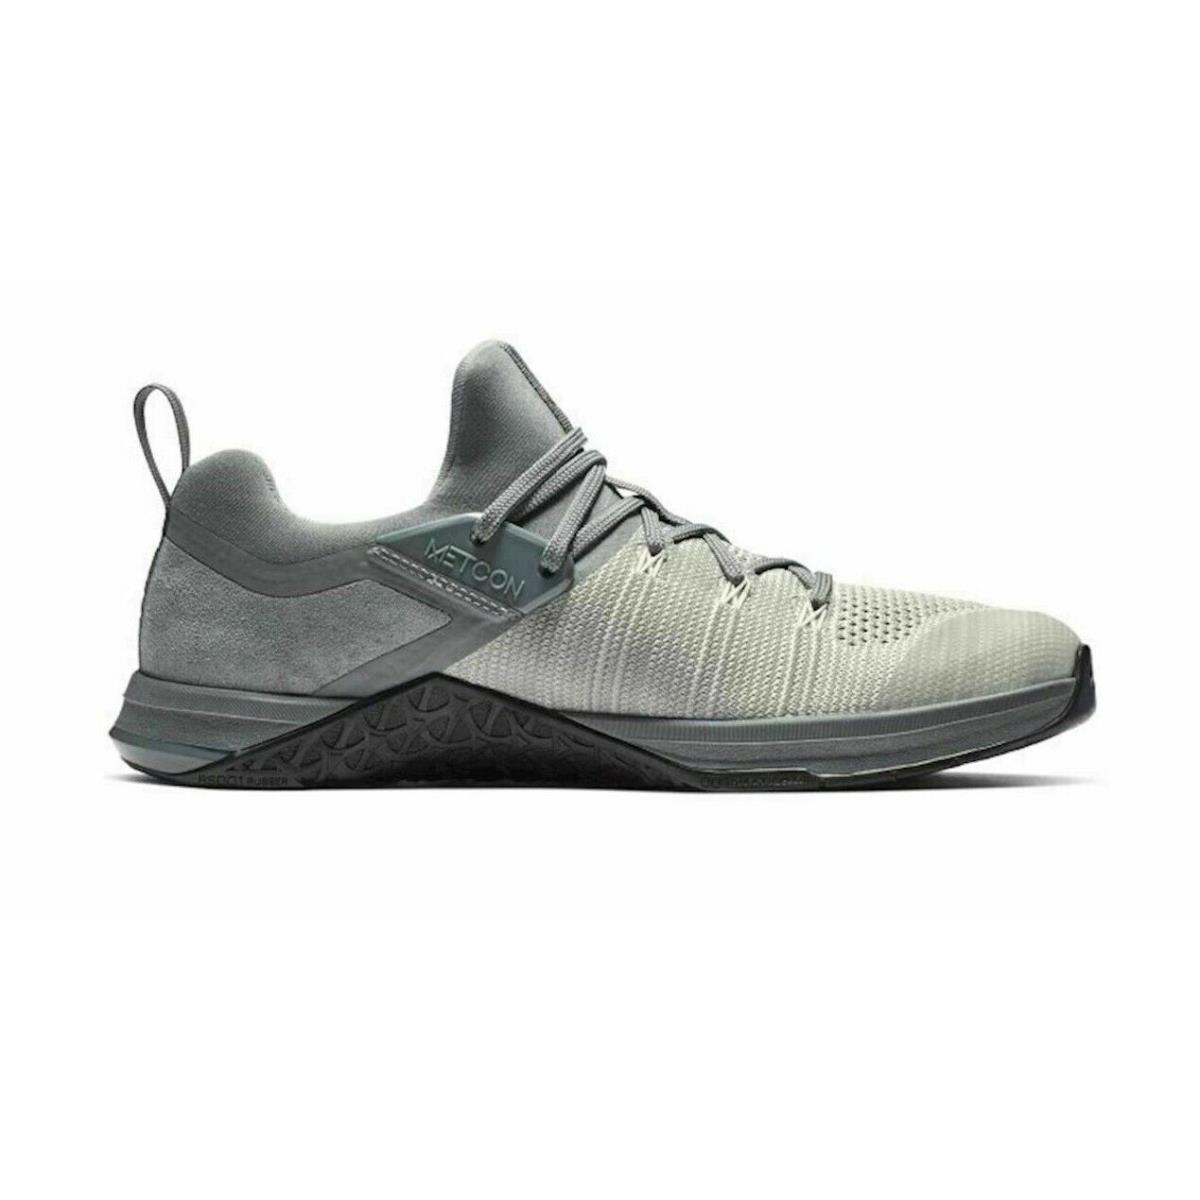 Nike shoes Metcon Flyknit - Cool Grey Black 0